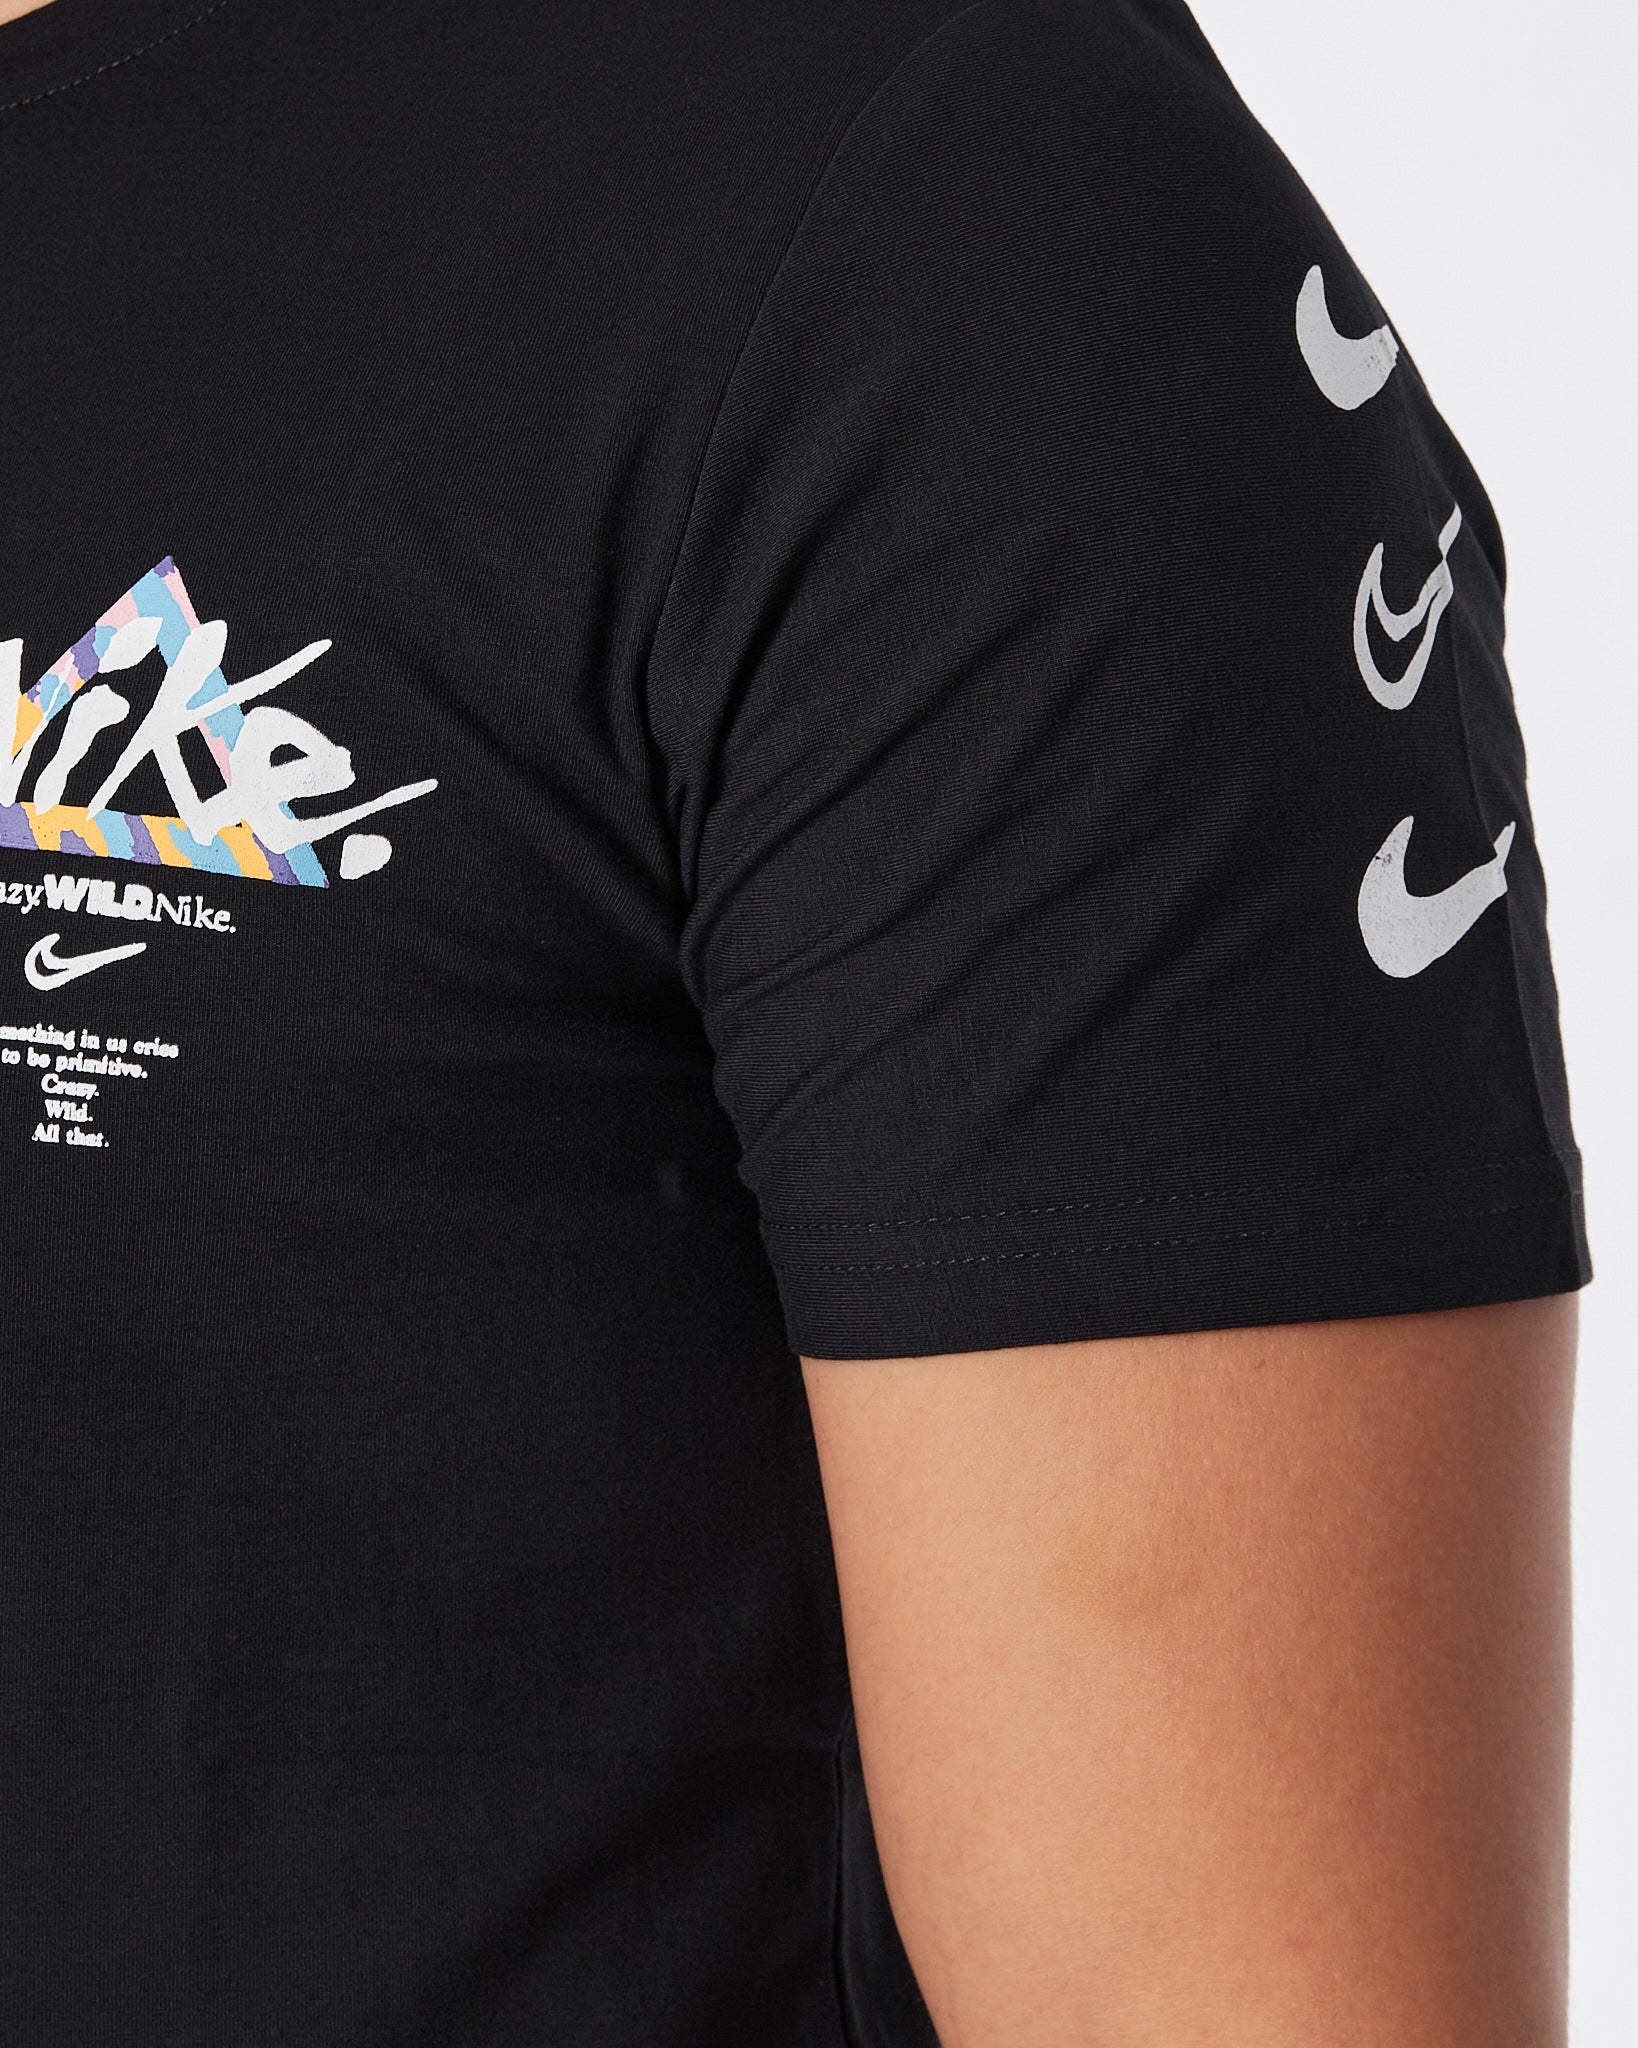 NIK Graffiti Logo Printed Men Black T-Shirt 14.90